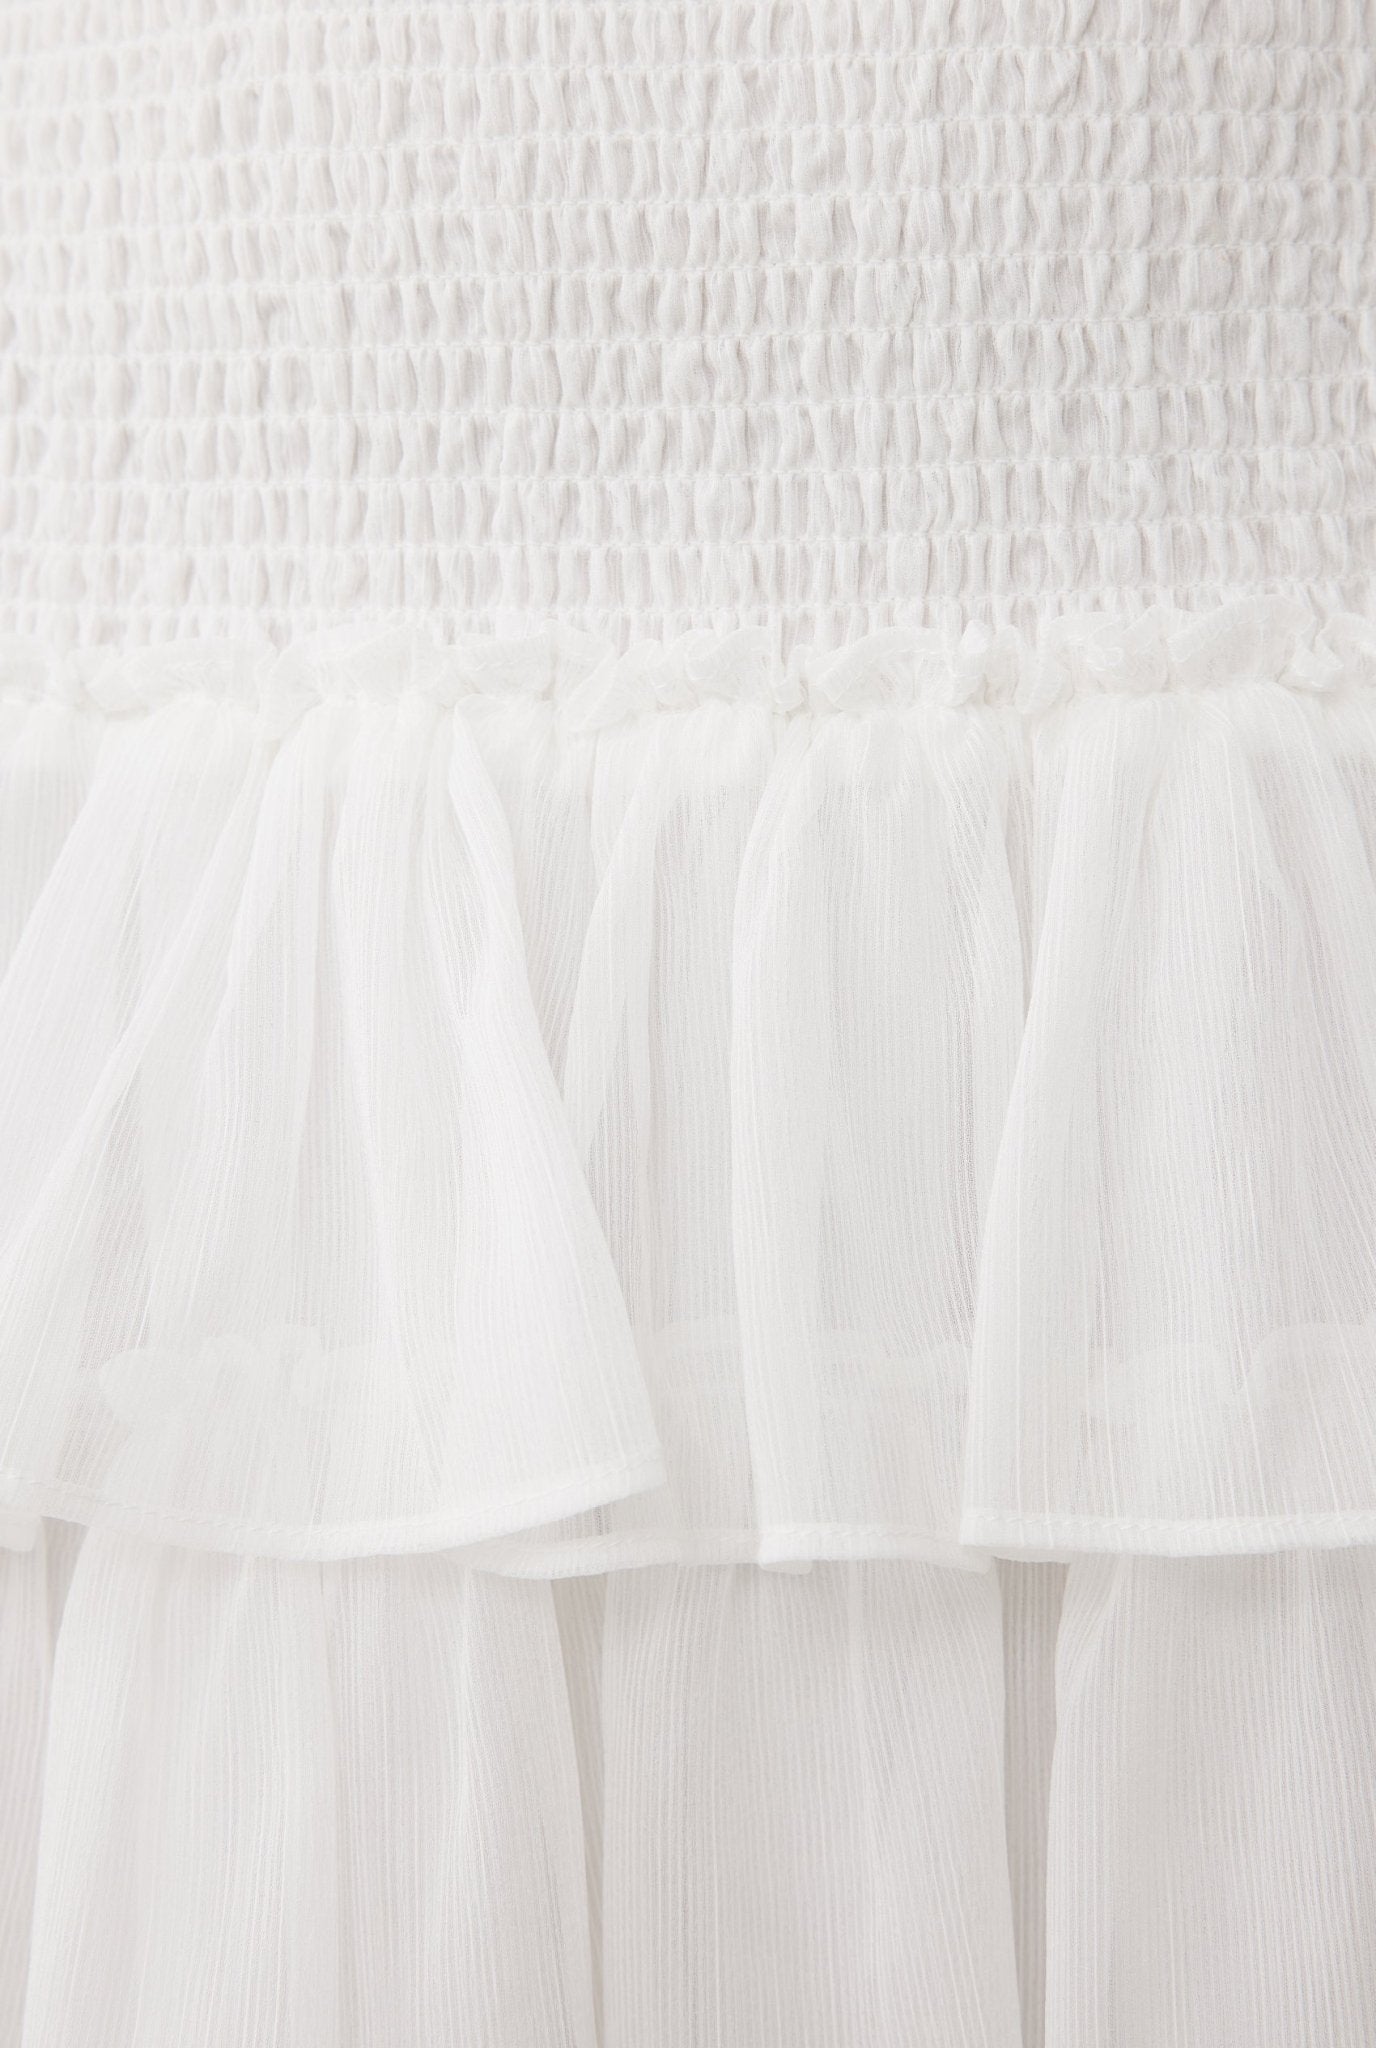 Dallas Skirt in White